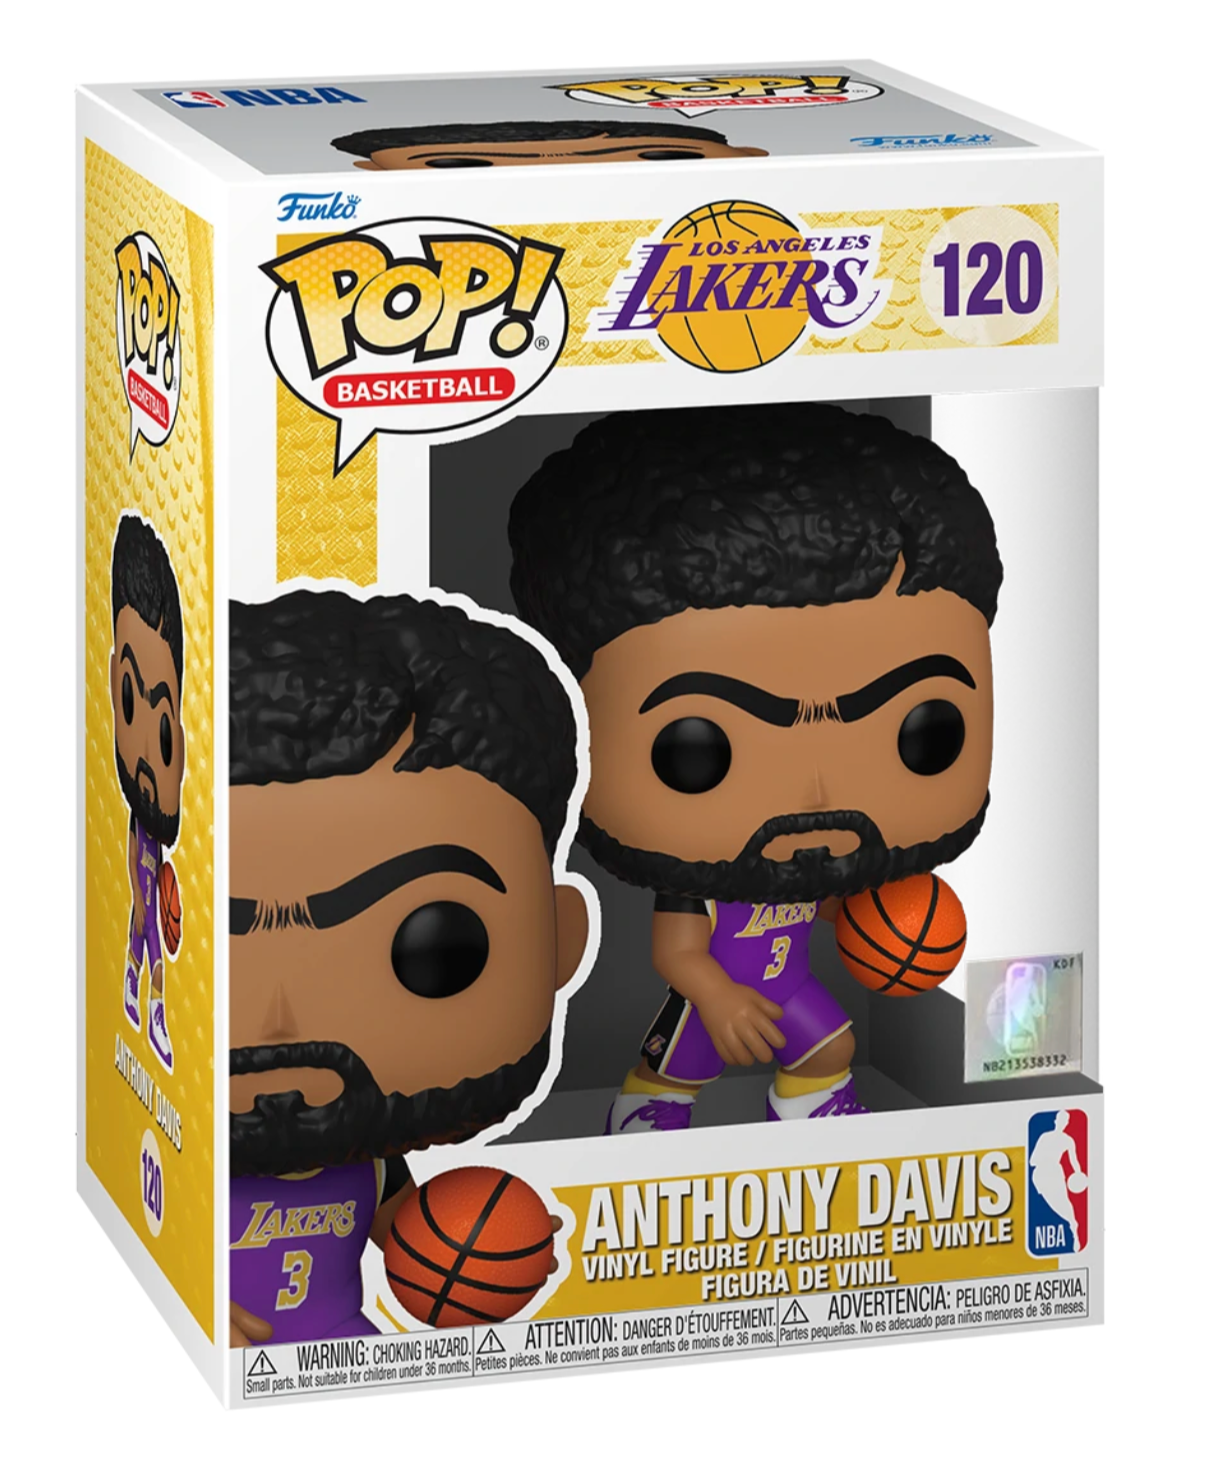 NBA: Lakers - Anthony Davis (Purple Jersey) Pop! Vinyl Figure (120)